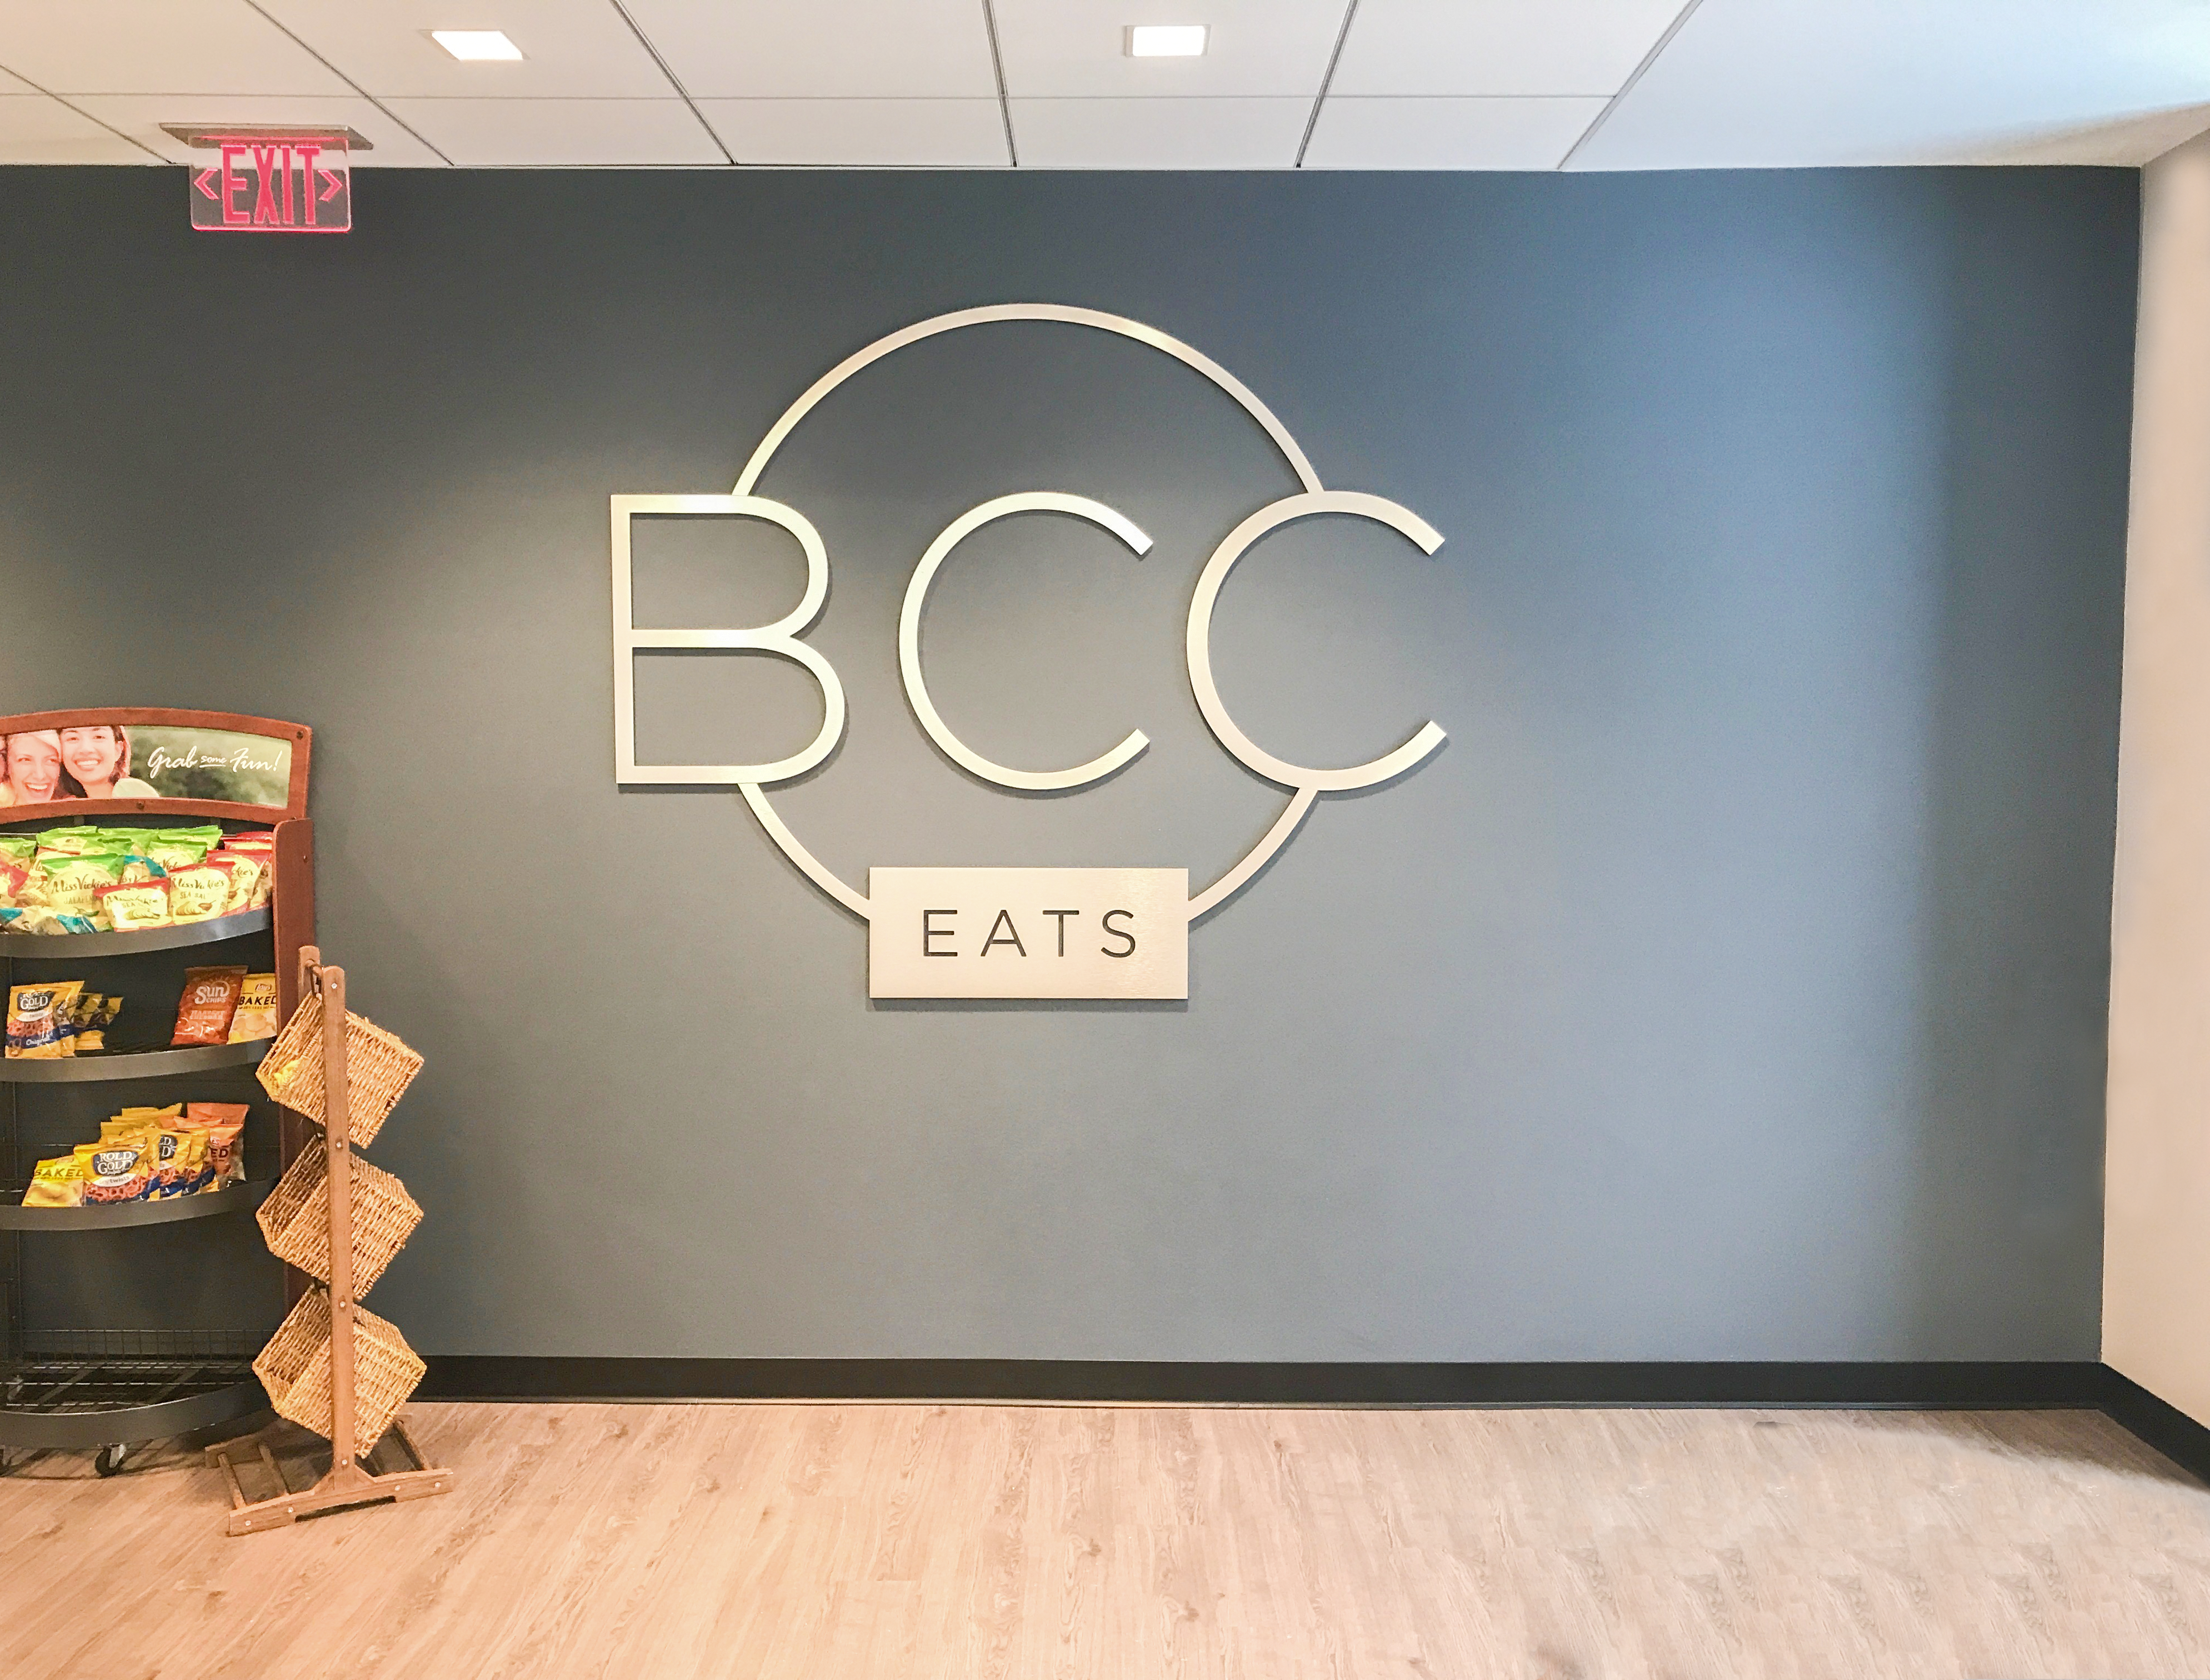 BCC Eats custom wall graphic